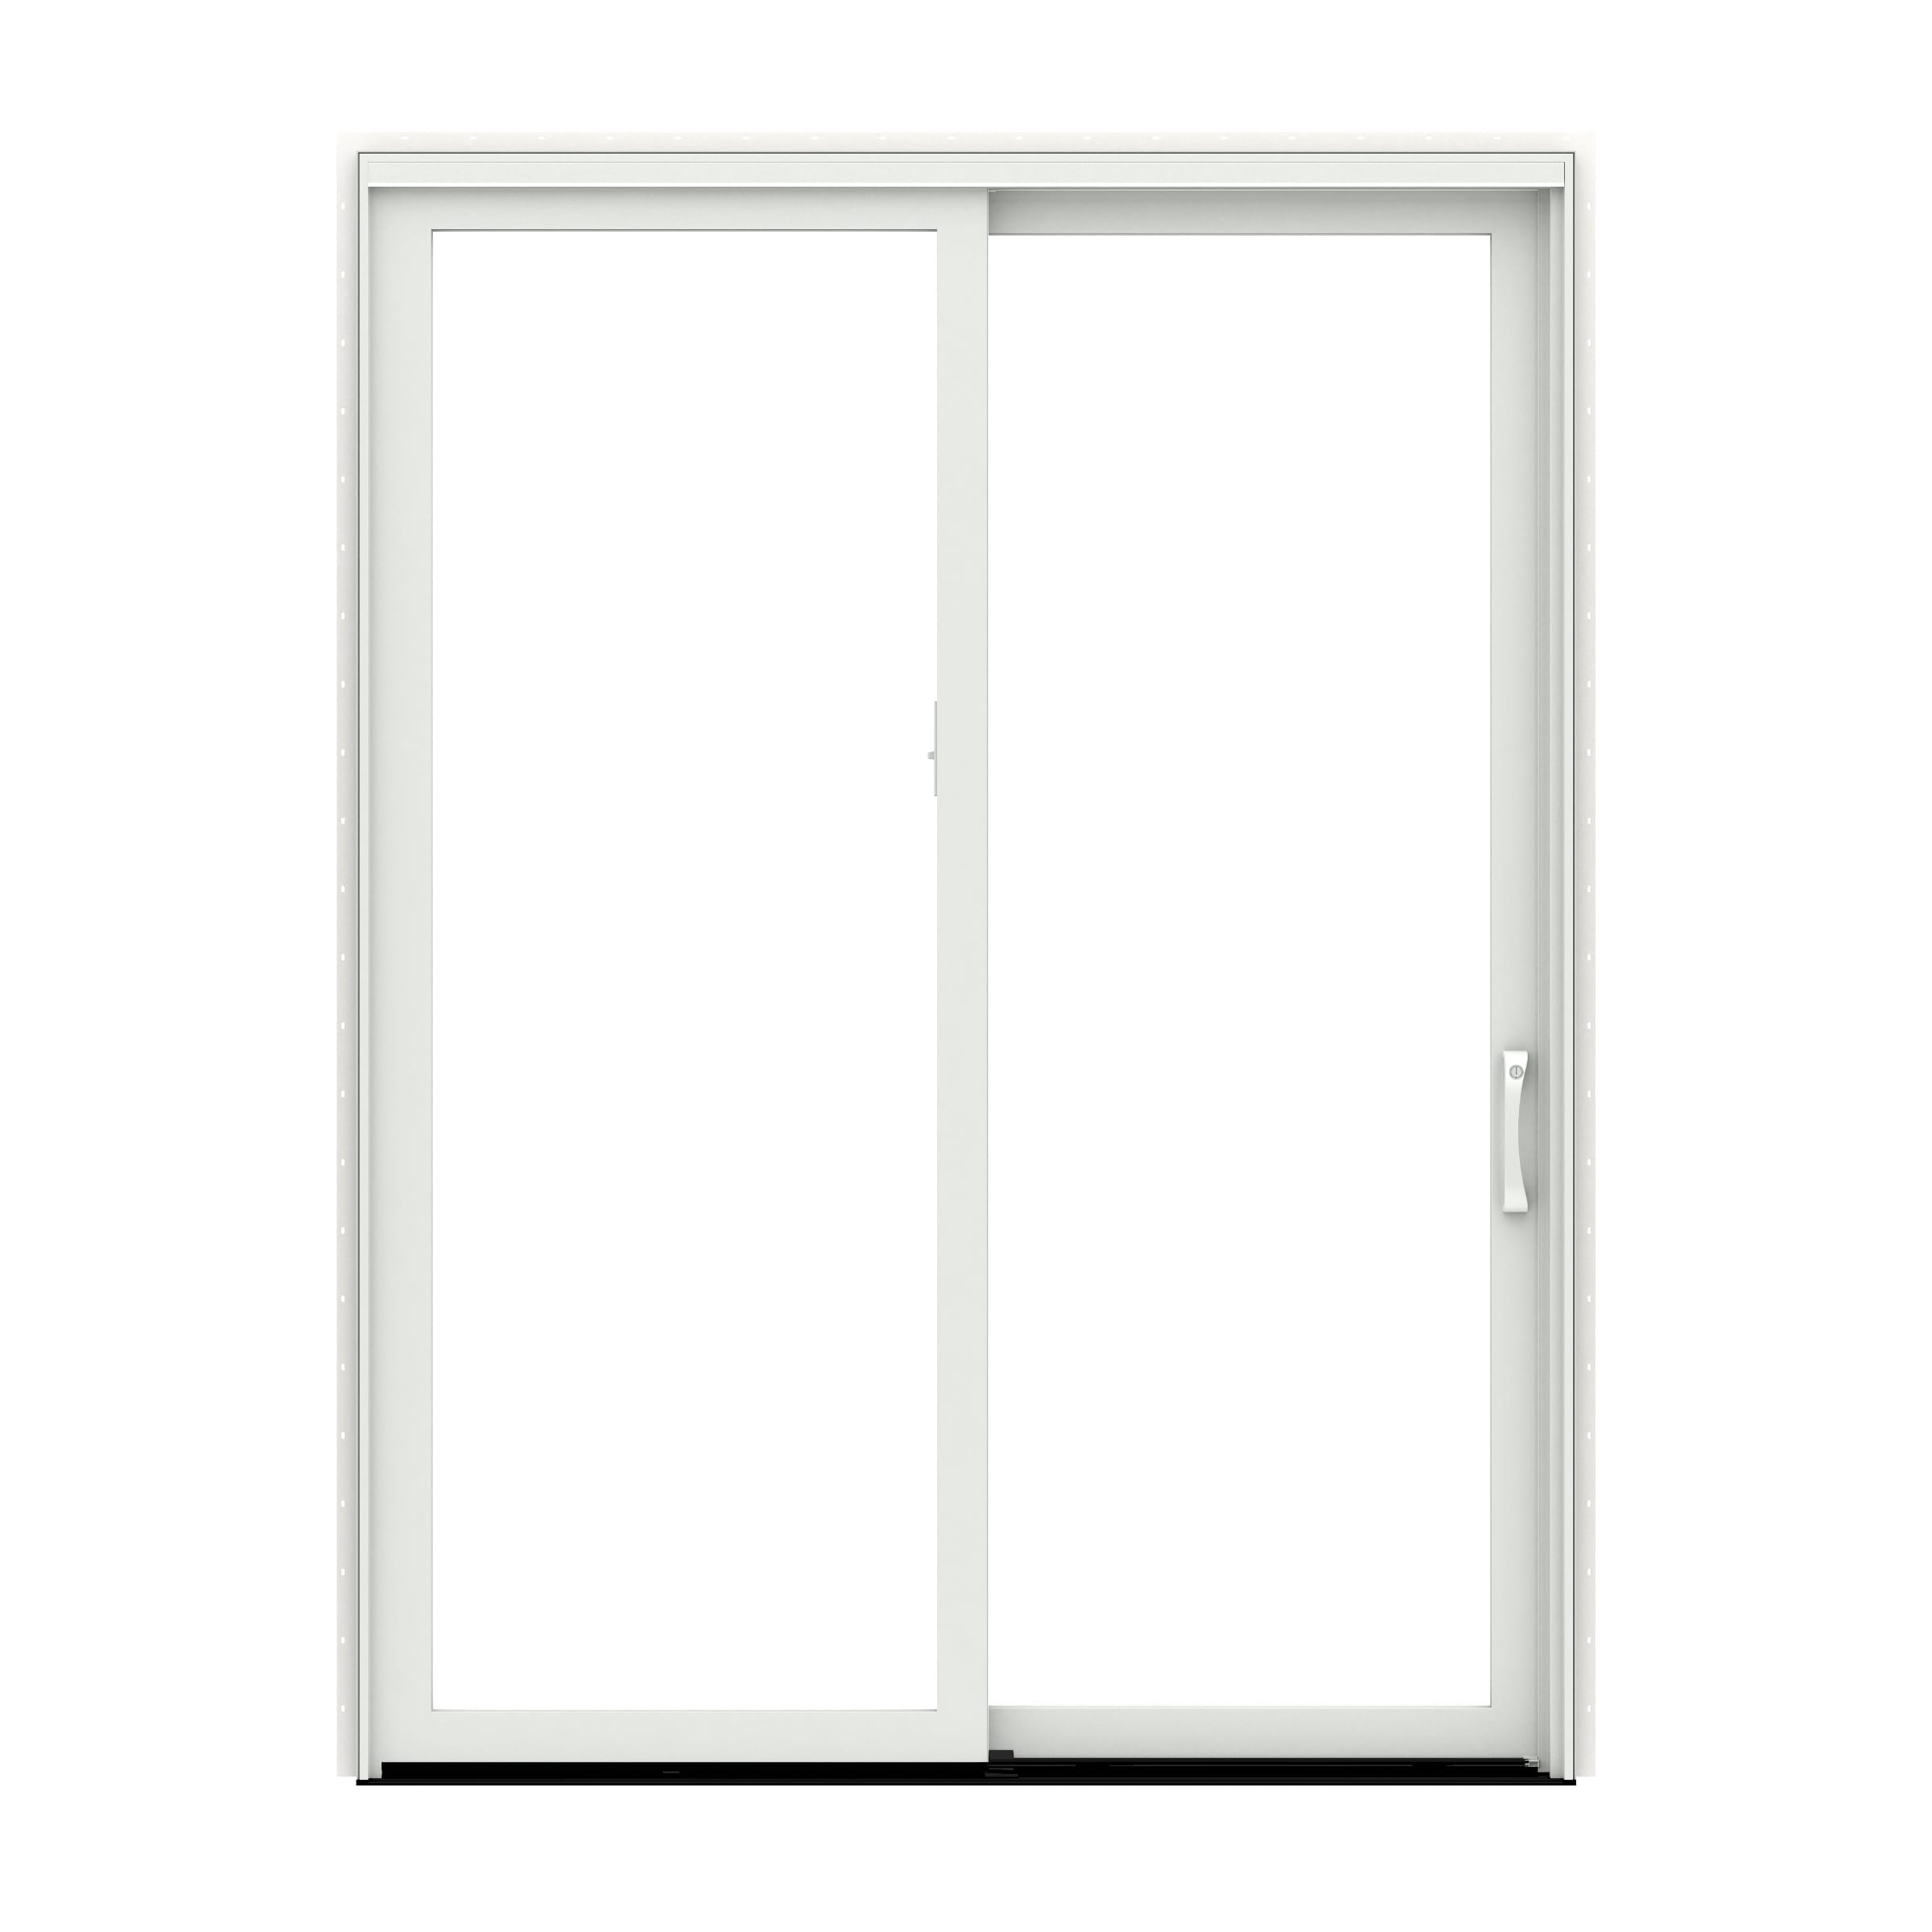 Impervia Series 96-in x 80-in Low-e Argon White Fiberglass Sliding Right-Hand Sliding Double Patio Door | - Pella 1000011480